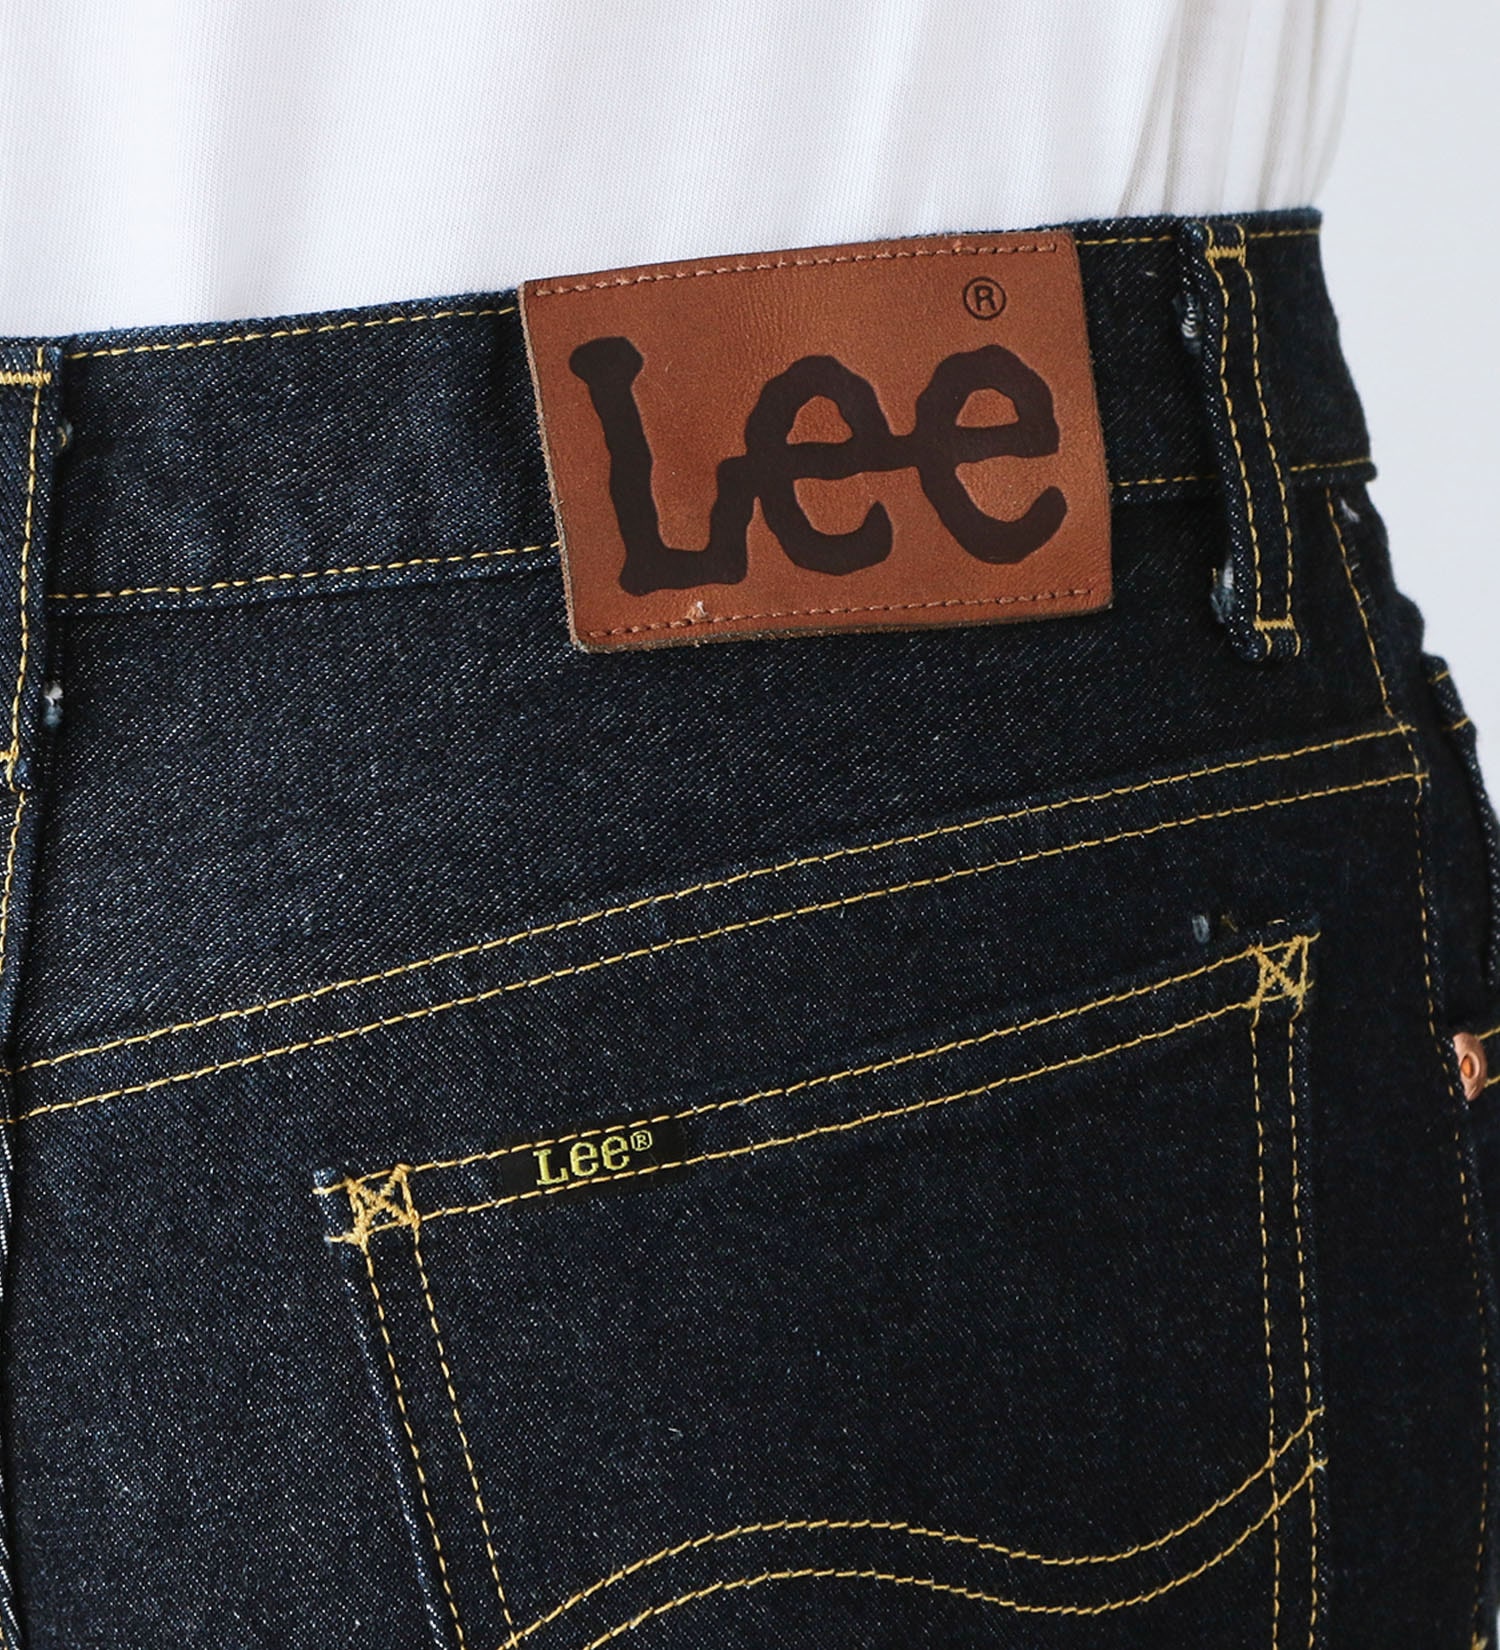 Lee(リー)のAMERICAN STANDARD 202ベルボトムジーンズ|パンツ/デニムパンツ/メンズ|インディゴブルー